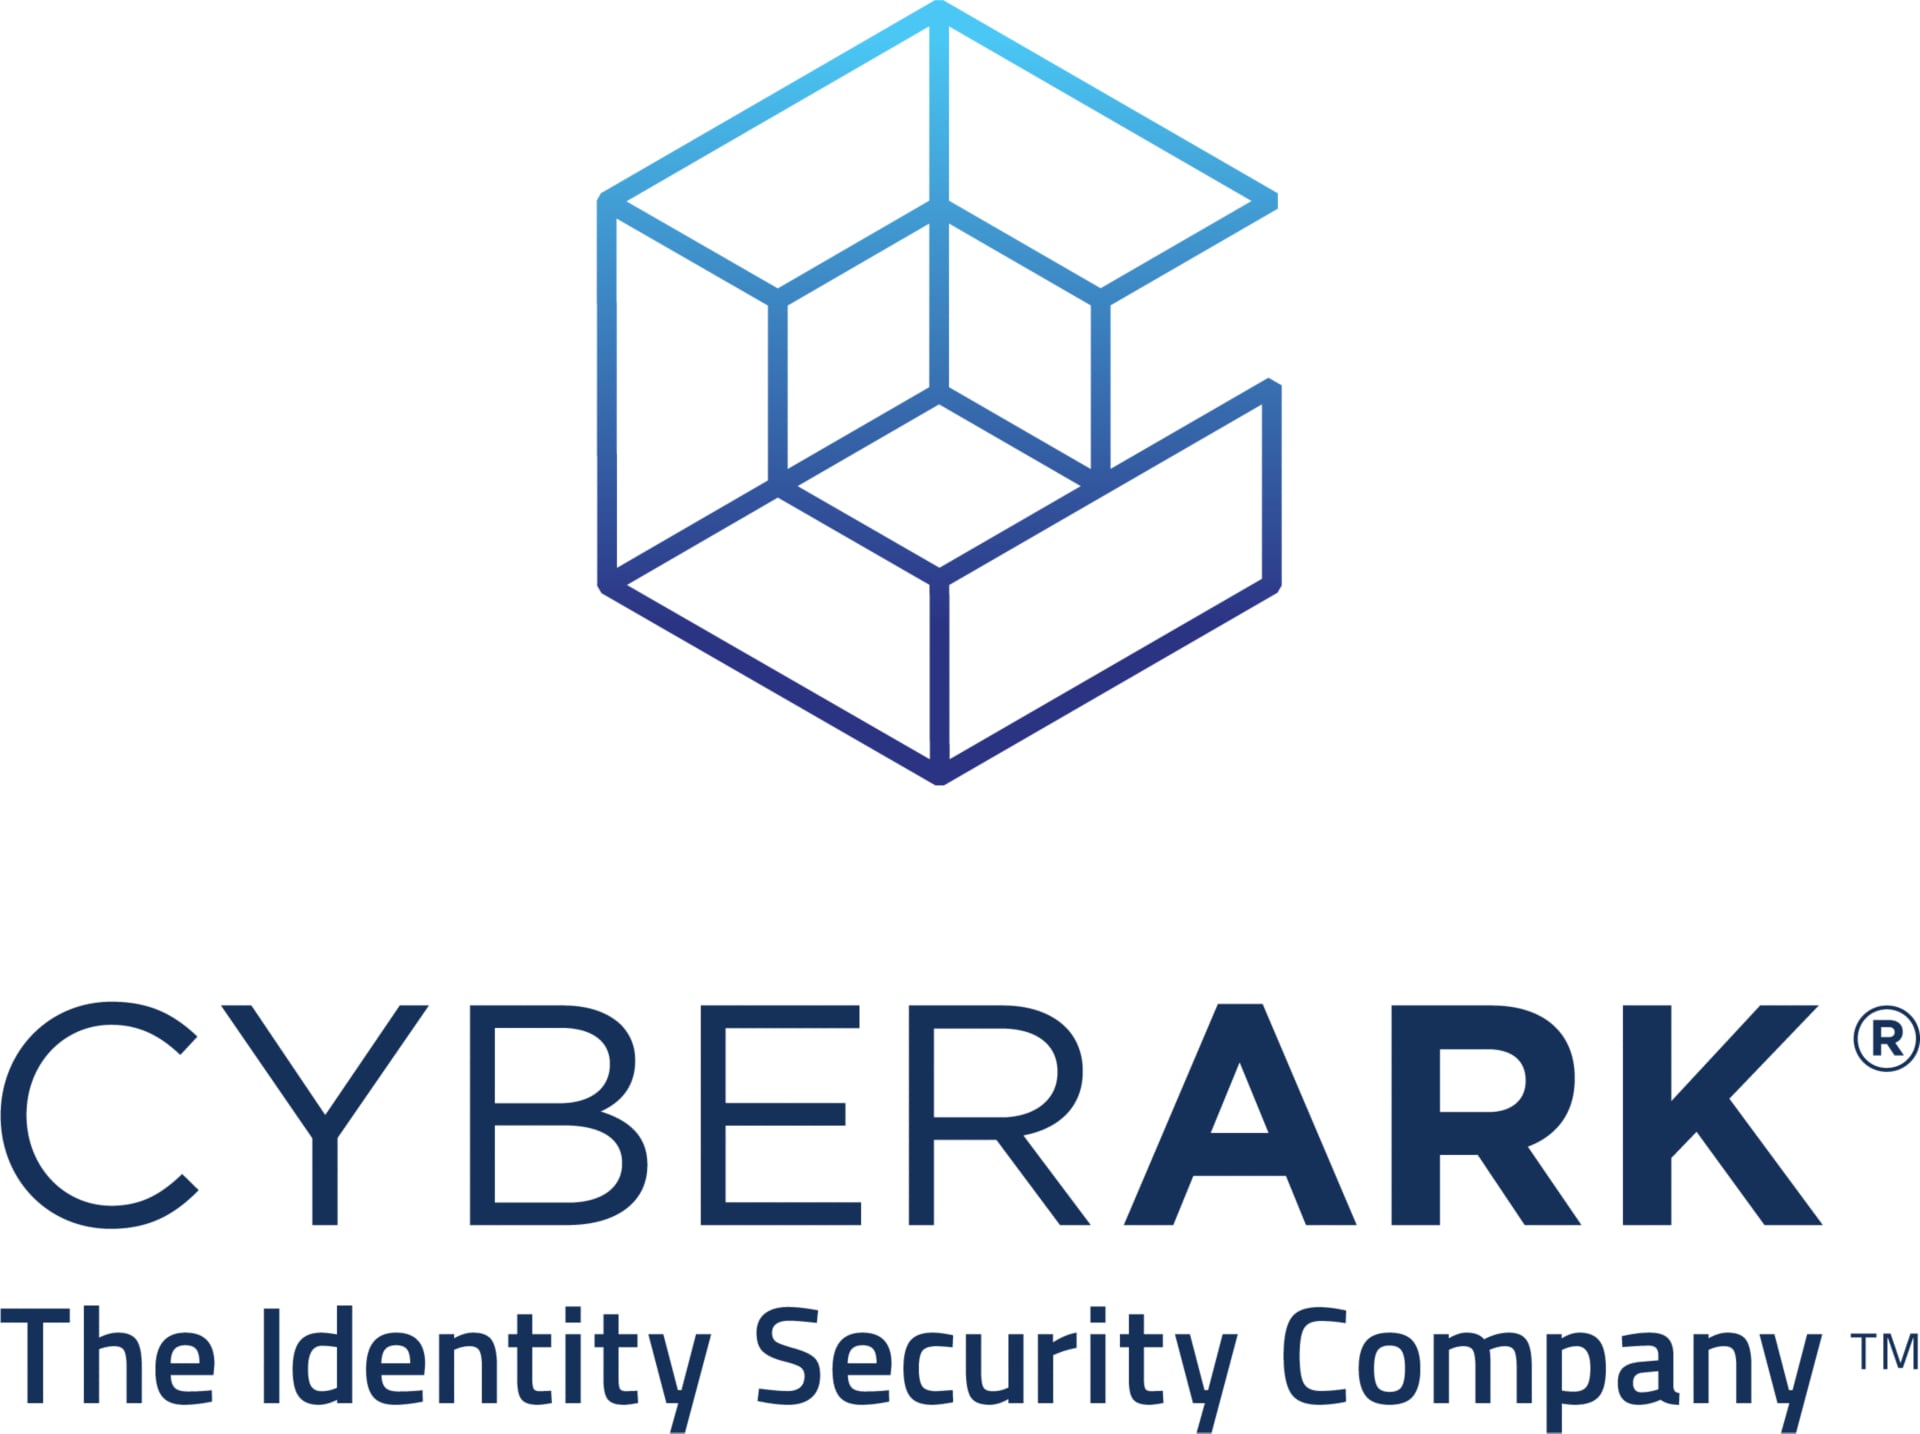 CYBERARK EPM WORKSTATION SAAS